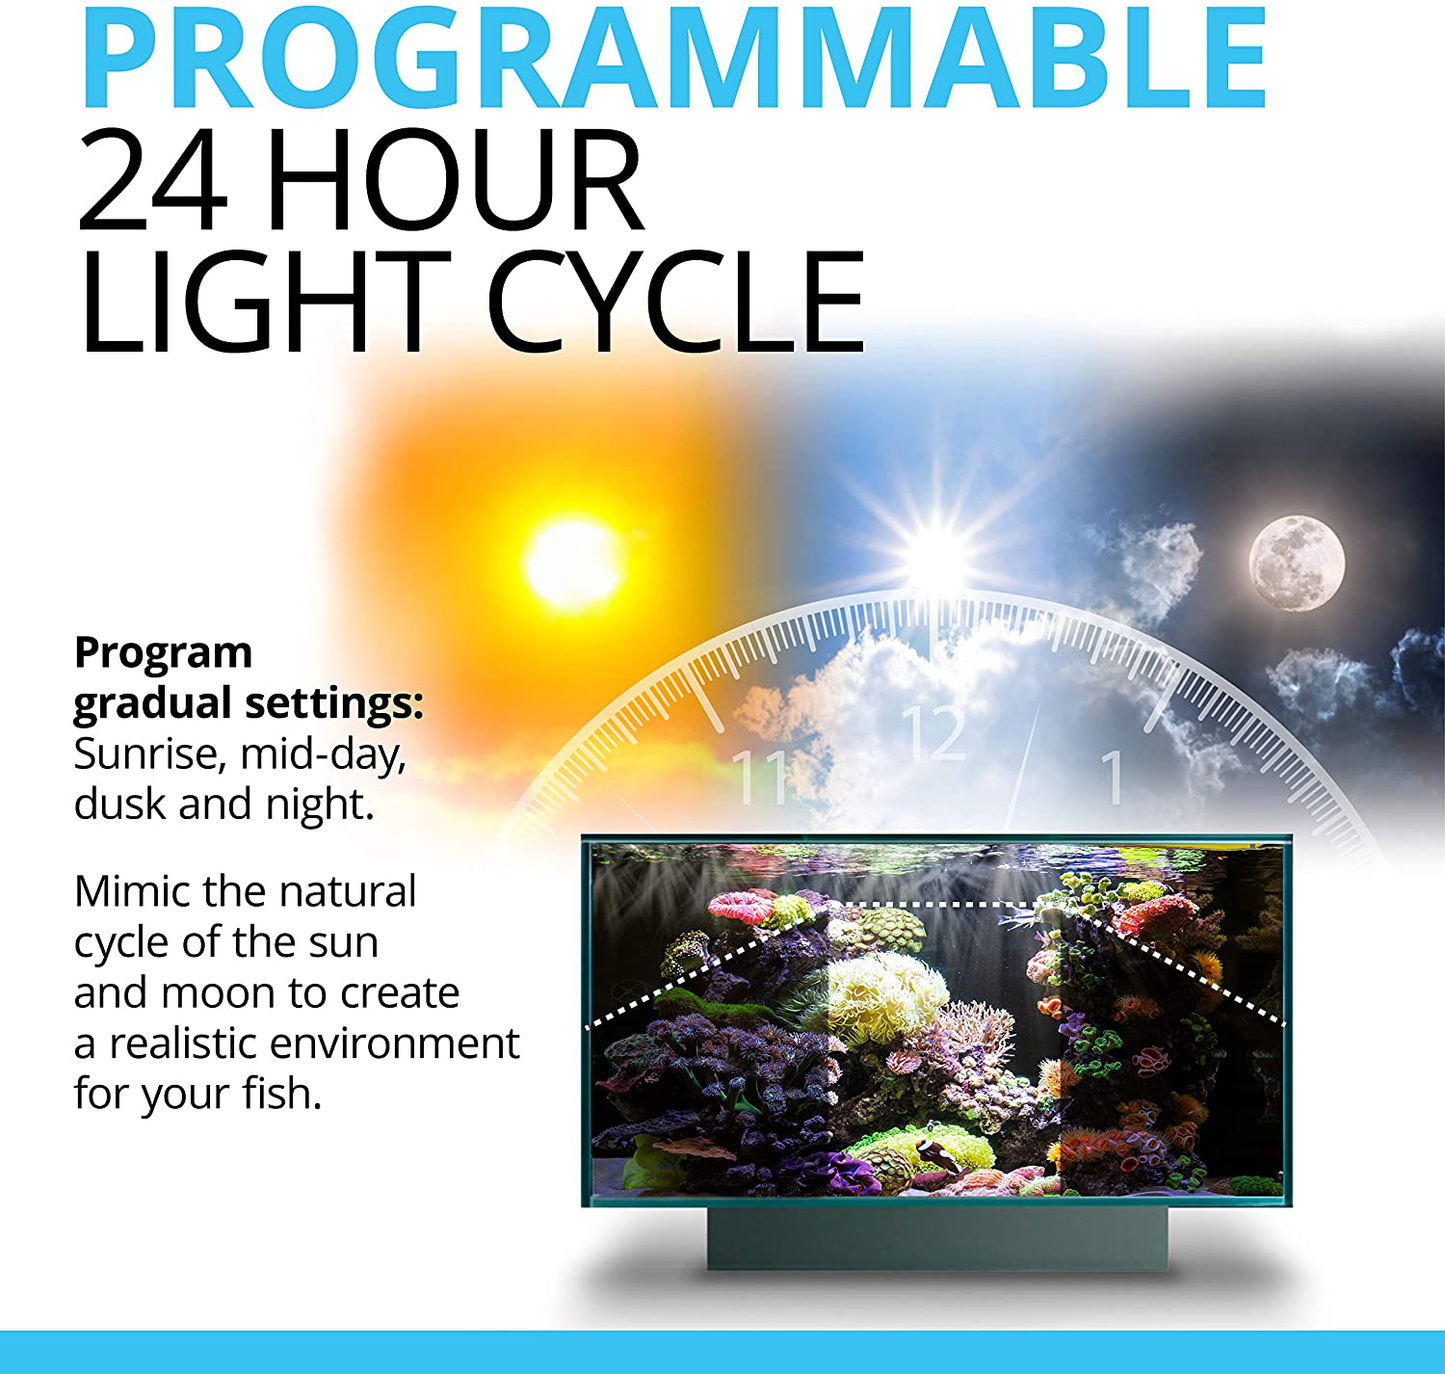 Fluval Sea Marine 3.0 LED Aquarium Lighting for Coral Growth, 59 Watts, 48-60 Inches